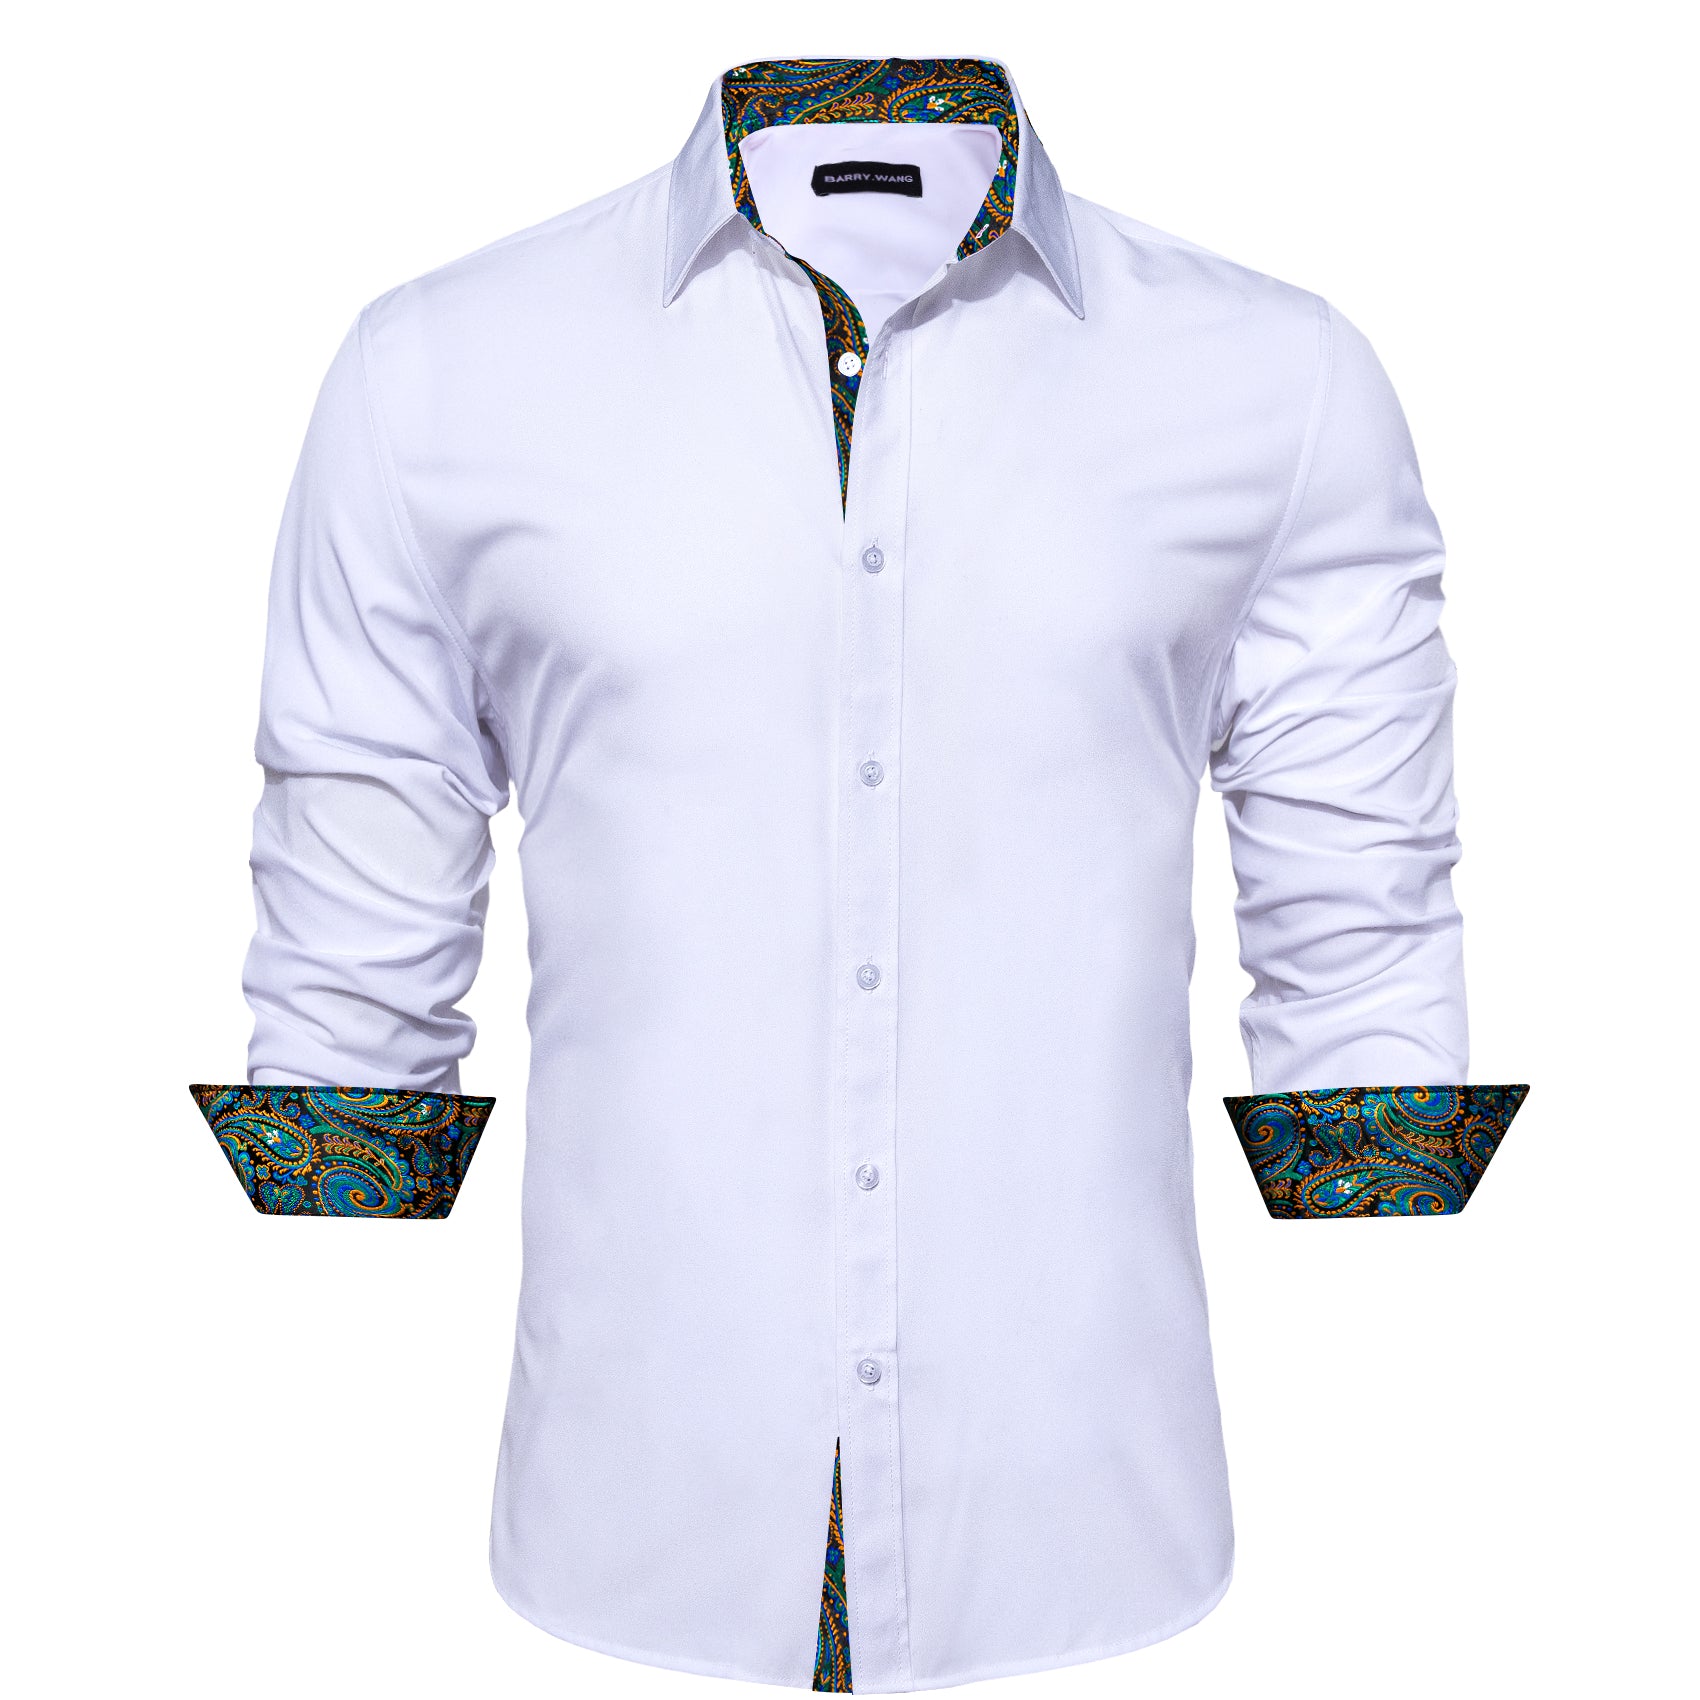 Teal collar white long sleeve shirt